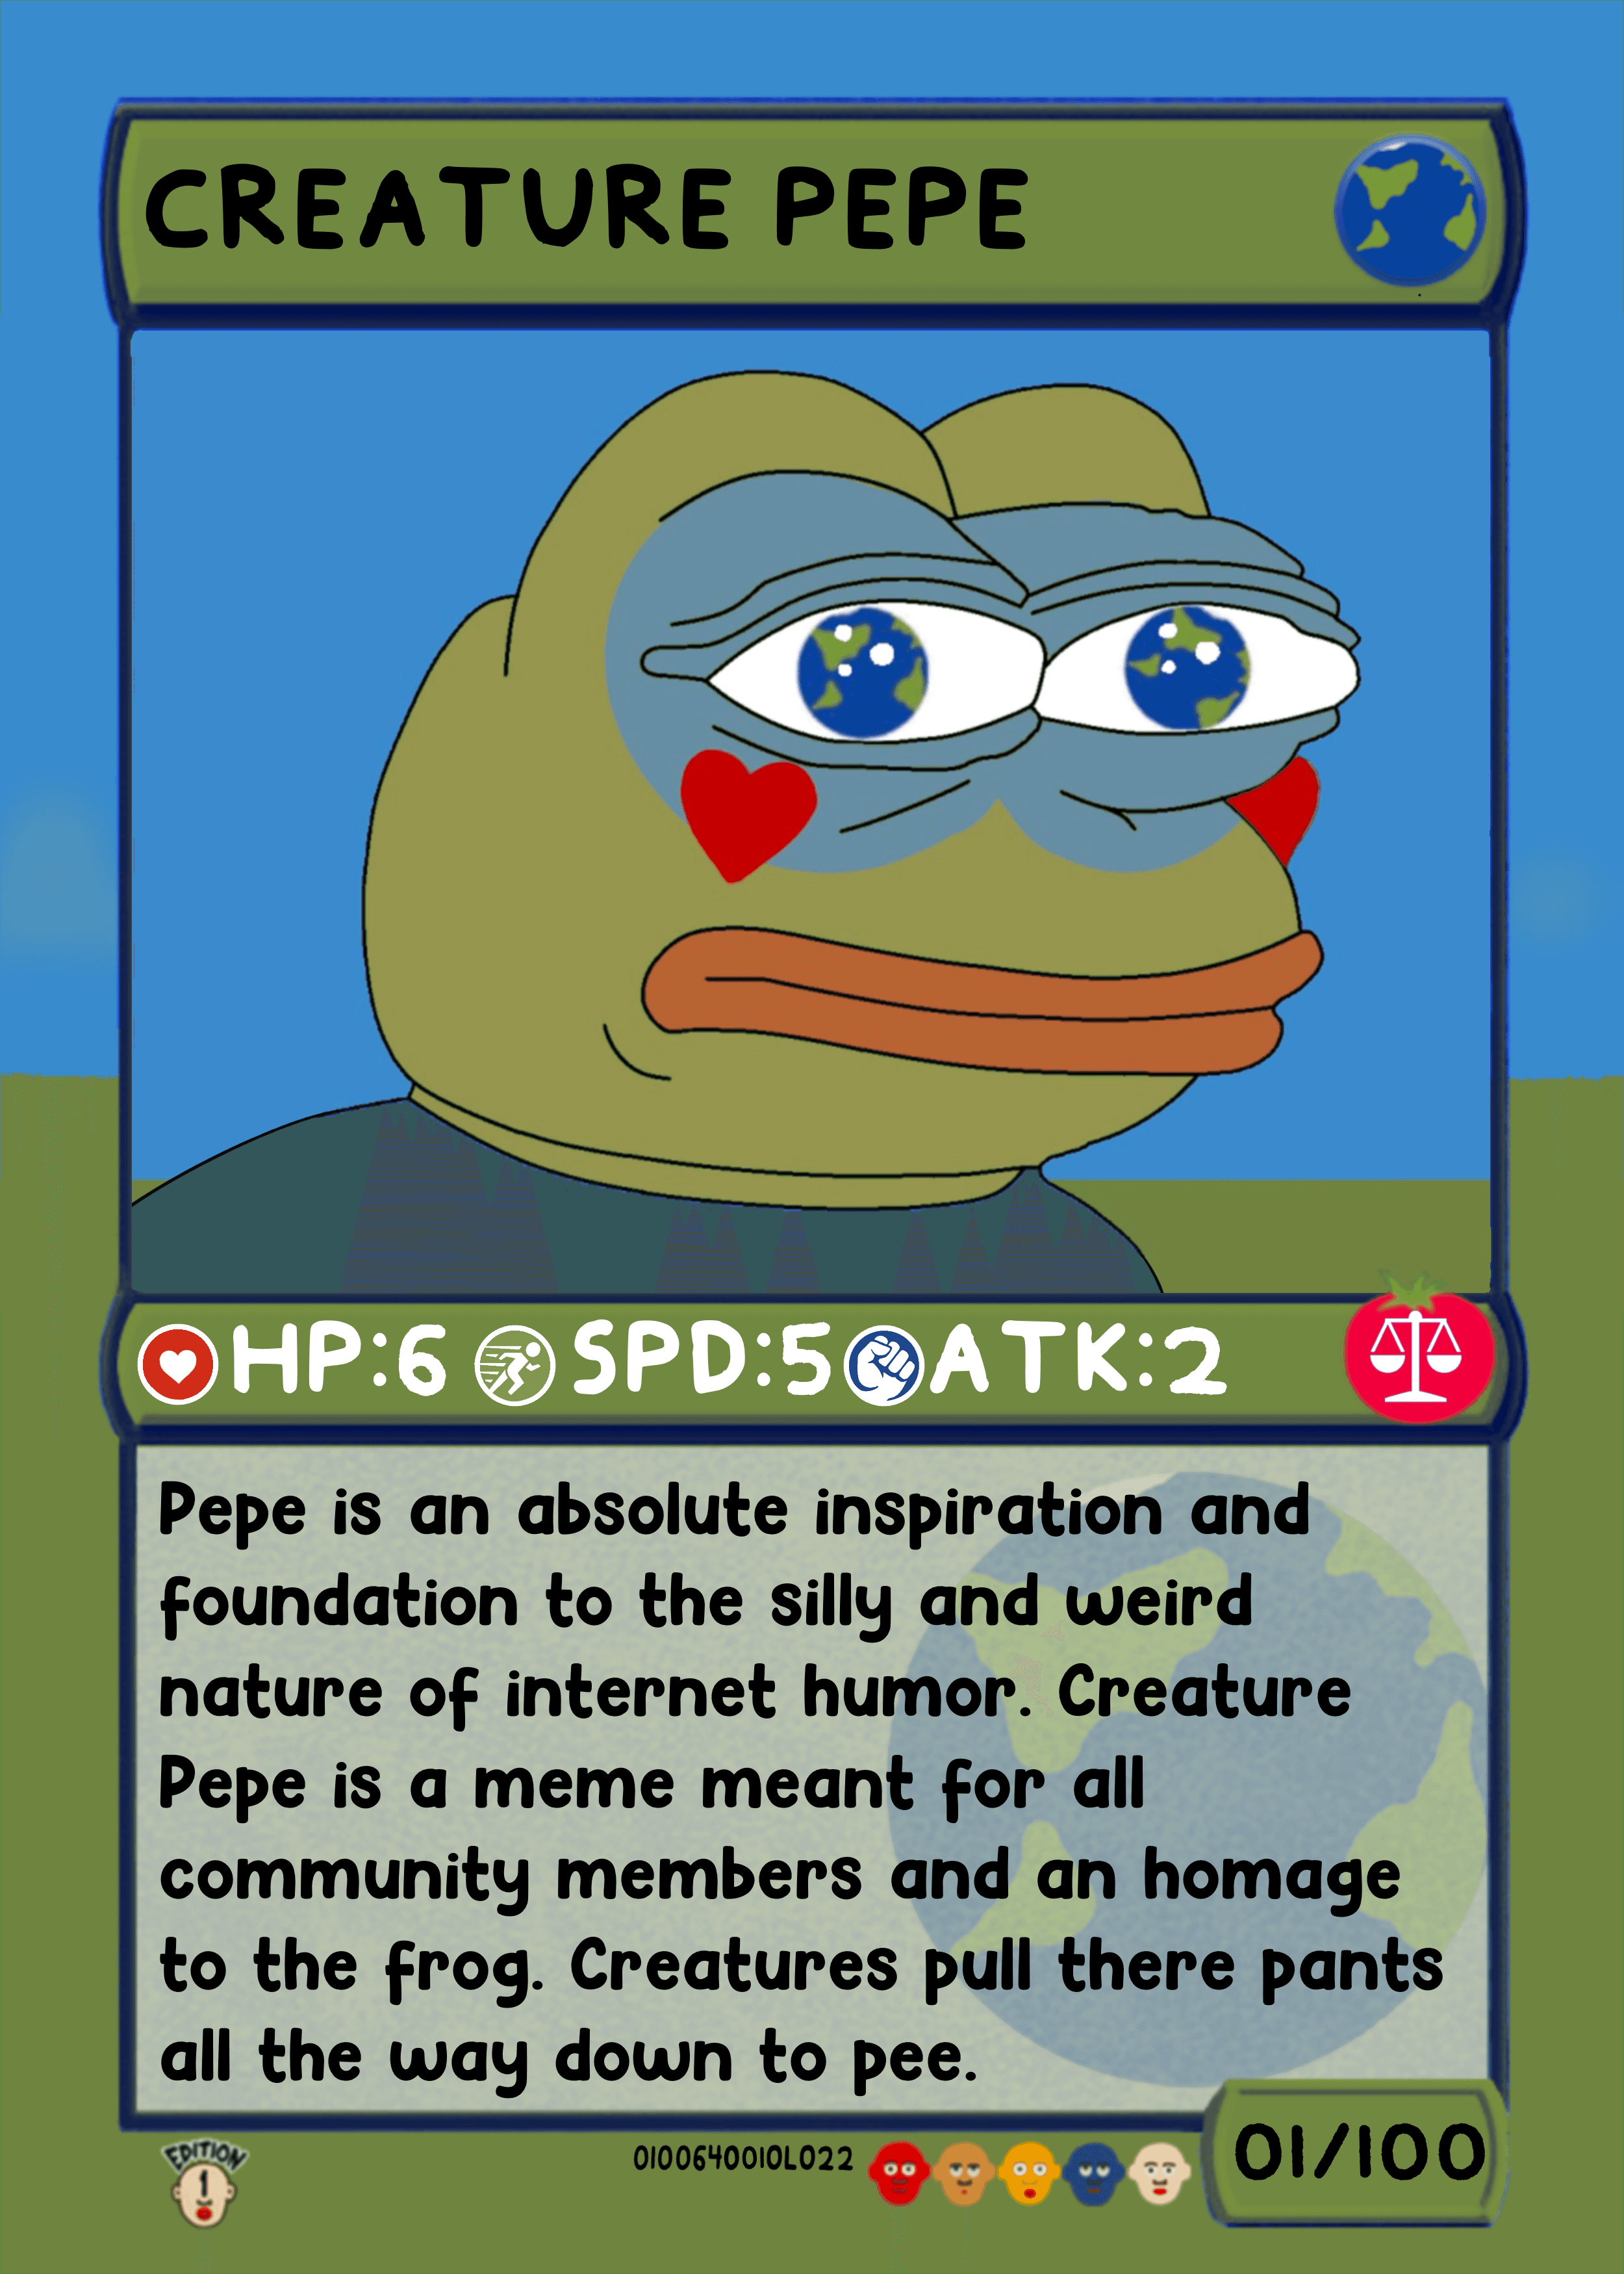 Creature Pepe